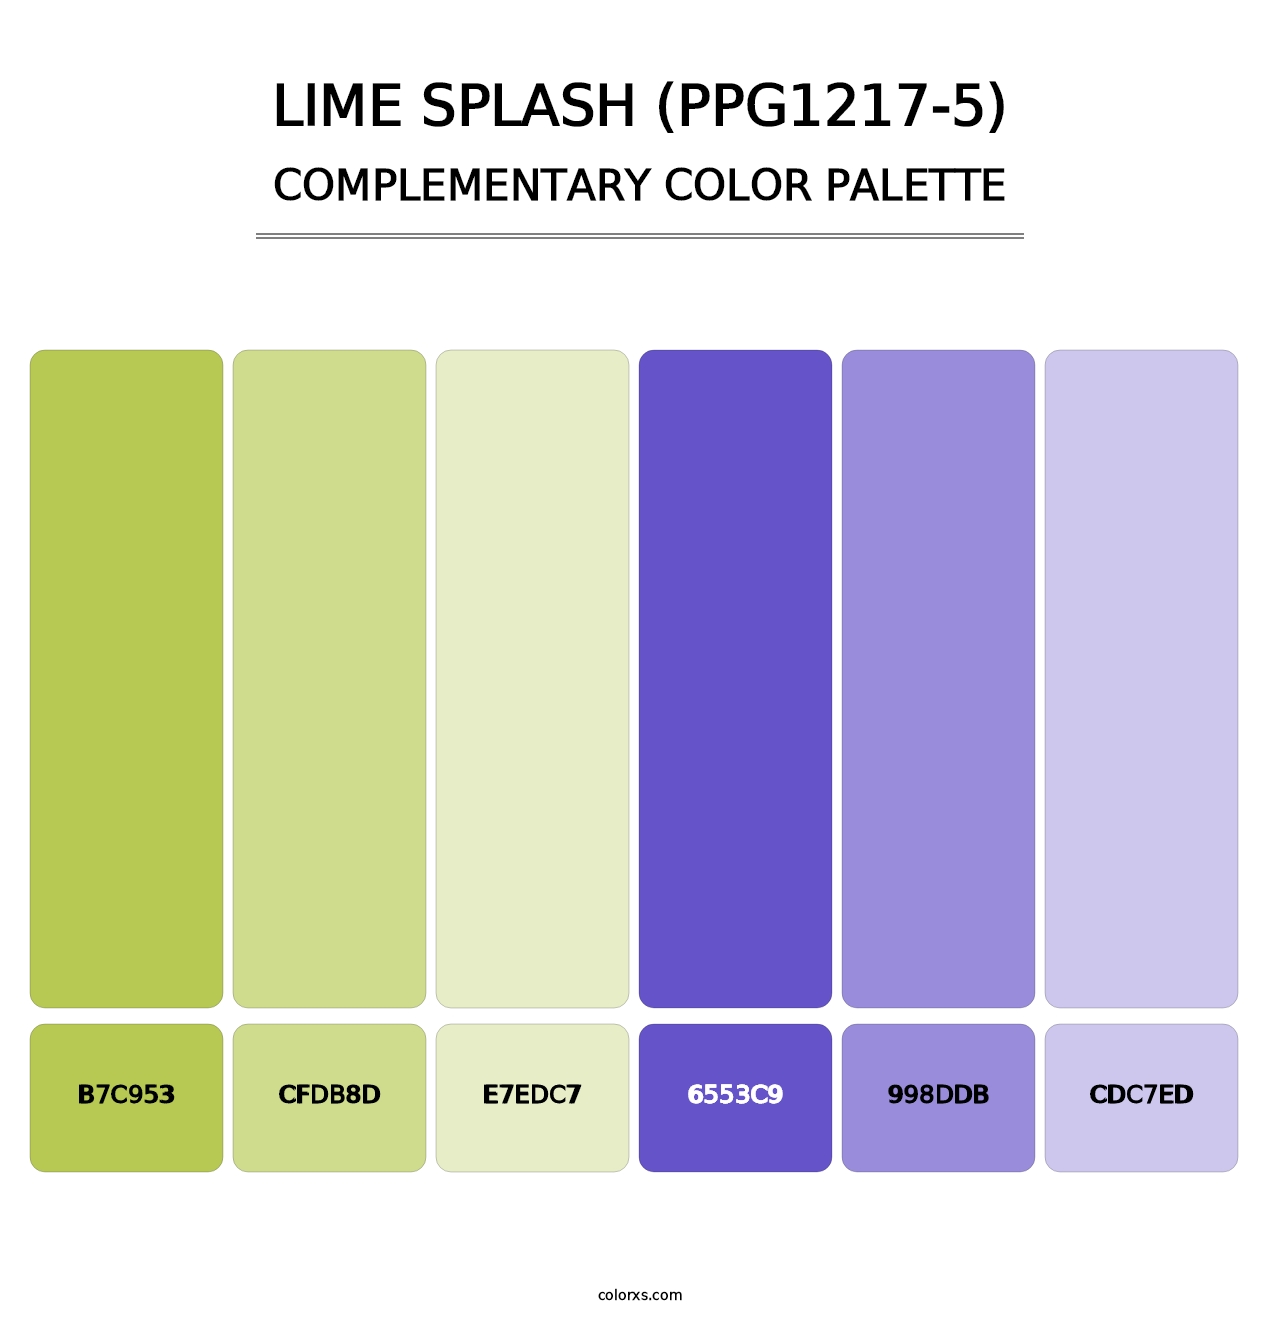 Lime Splash (PPG1217-5) - Complementary Color Palette